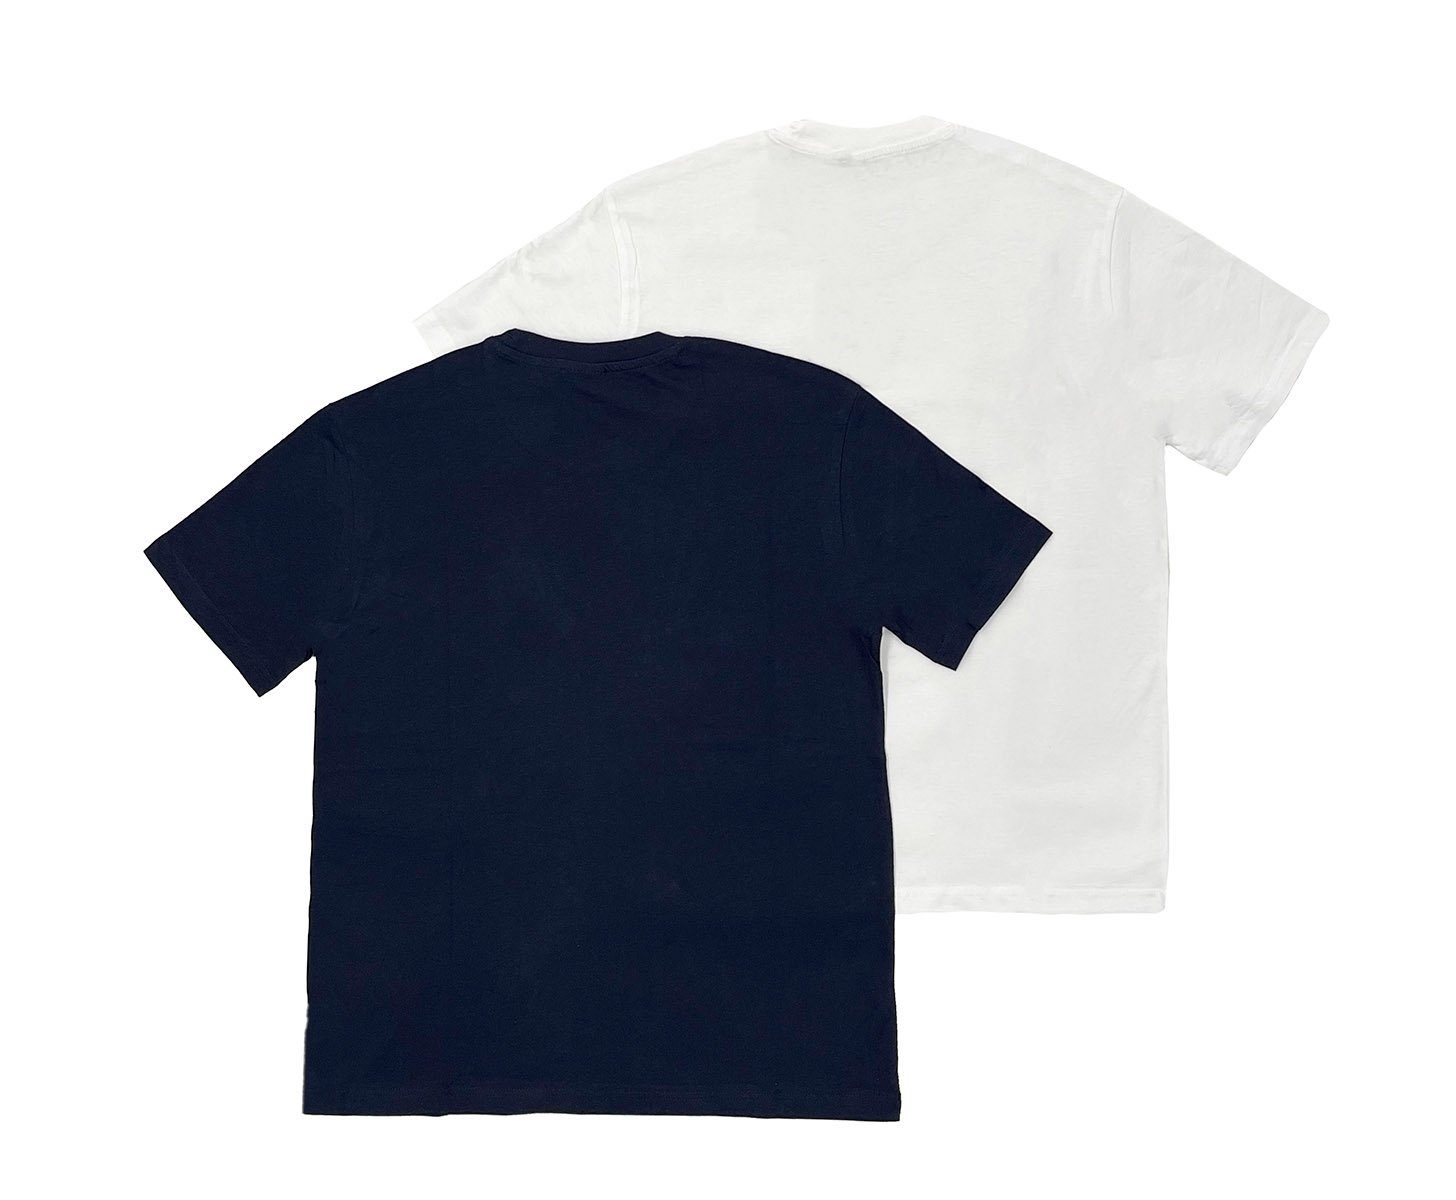 Herren weiß/blau Champion Champion 2Pack (2-tlg) (wht/nny) T-Shirt white/navy T-Shirts